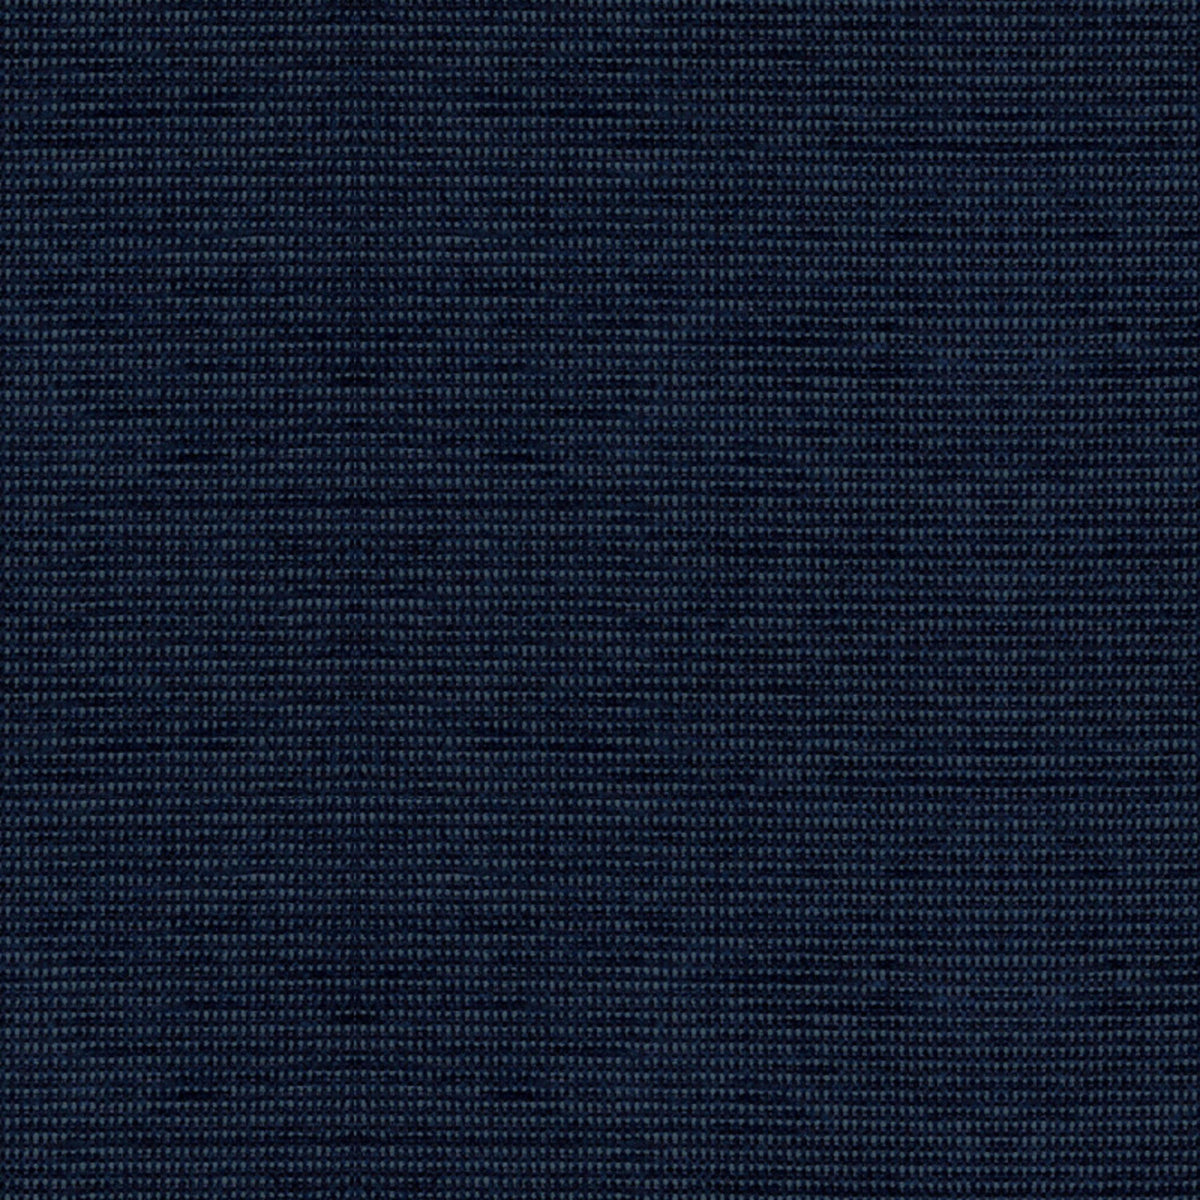 Highlands Navy Fabric |#| 